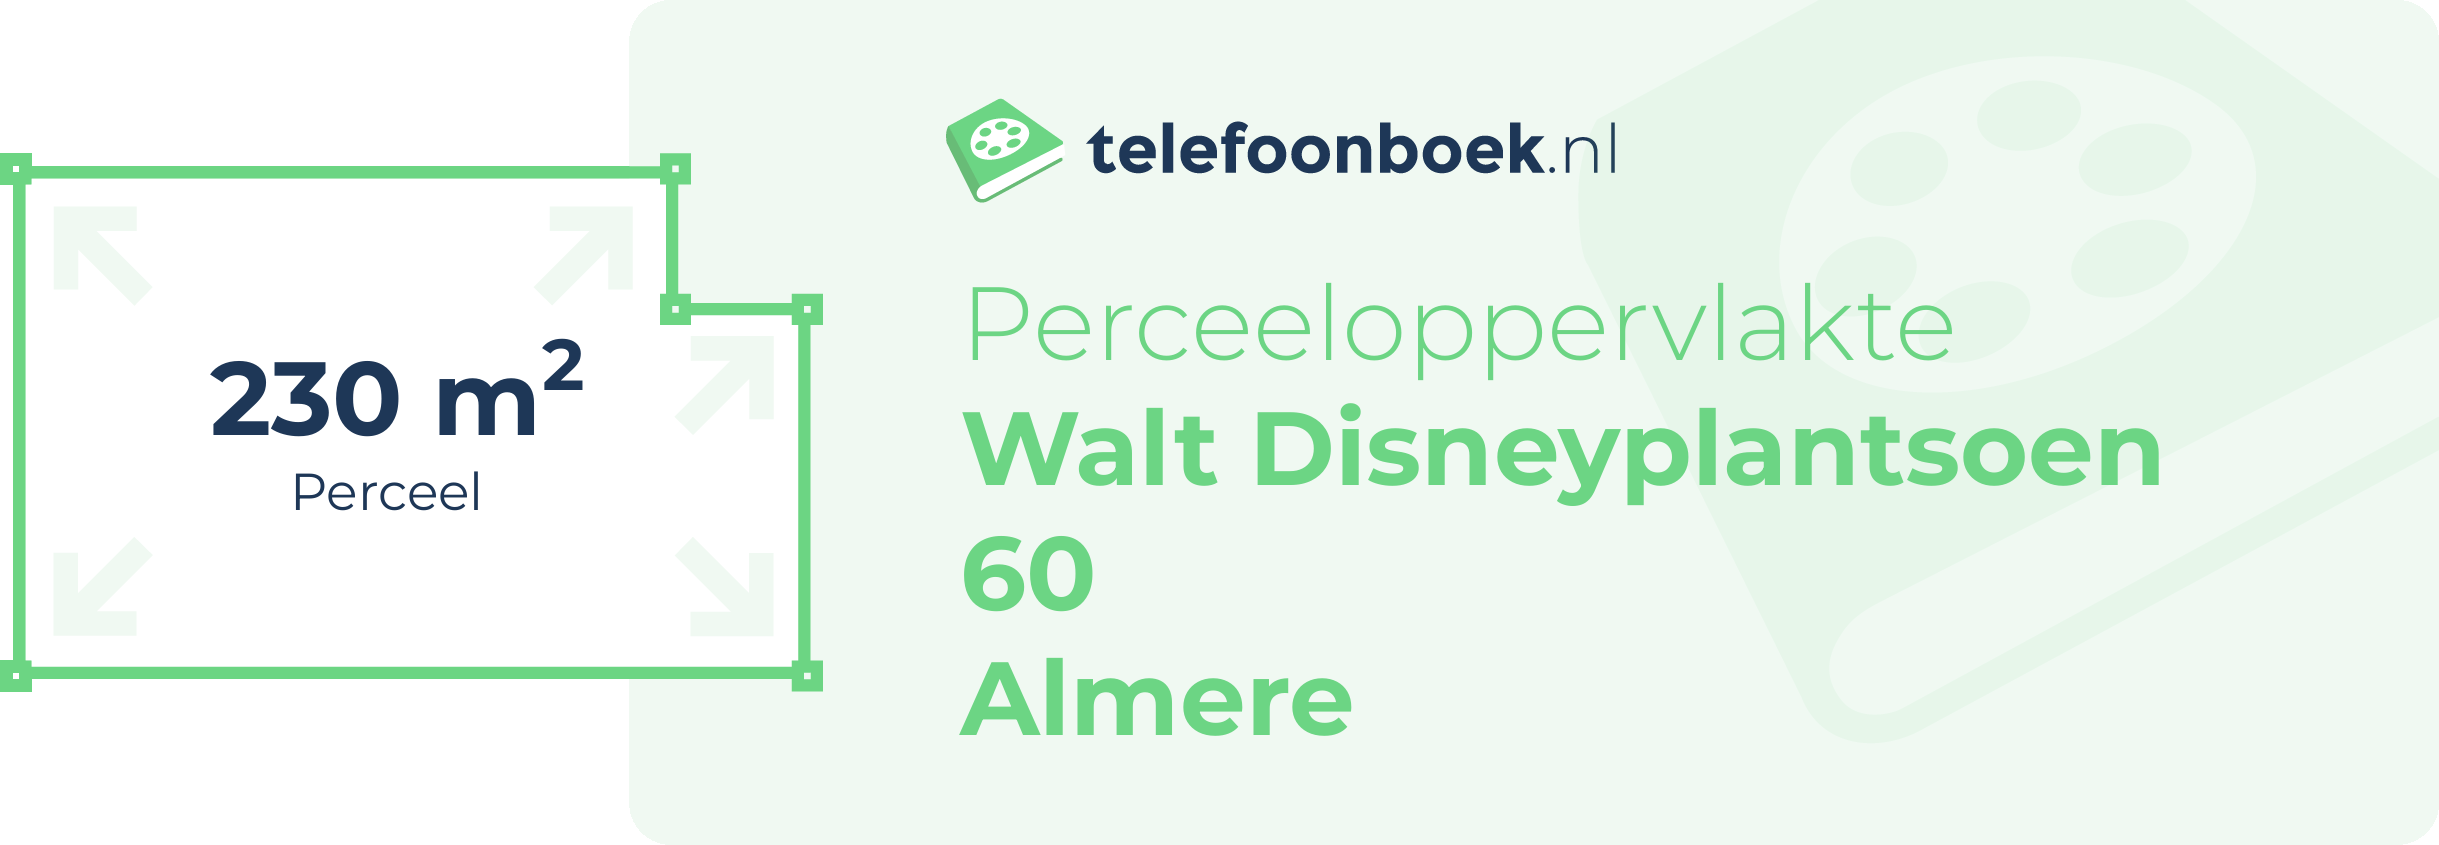 Perceeloppervlakte Walt Disneyplantsoen 60 Almere